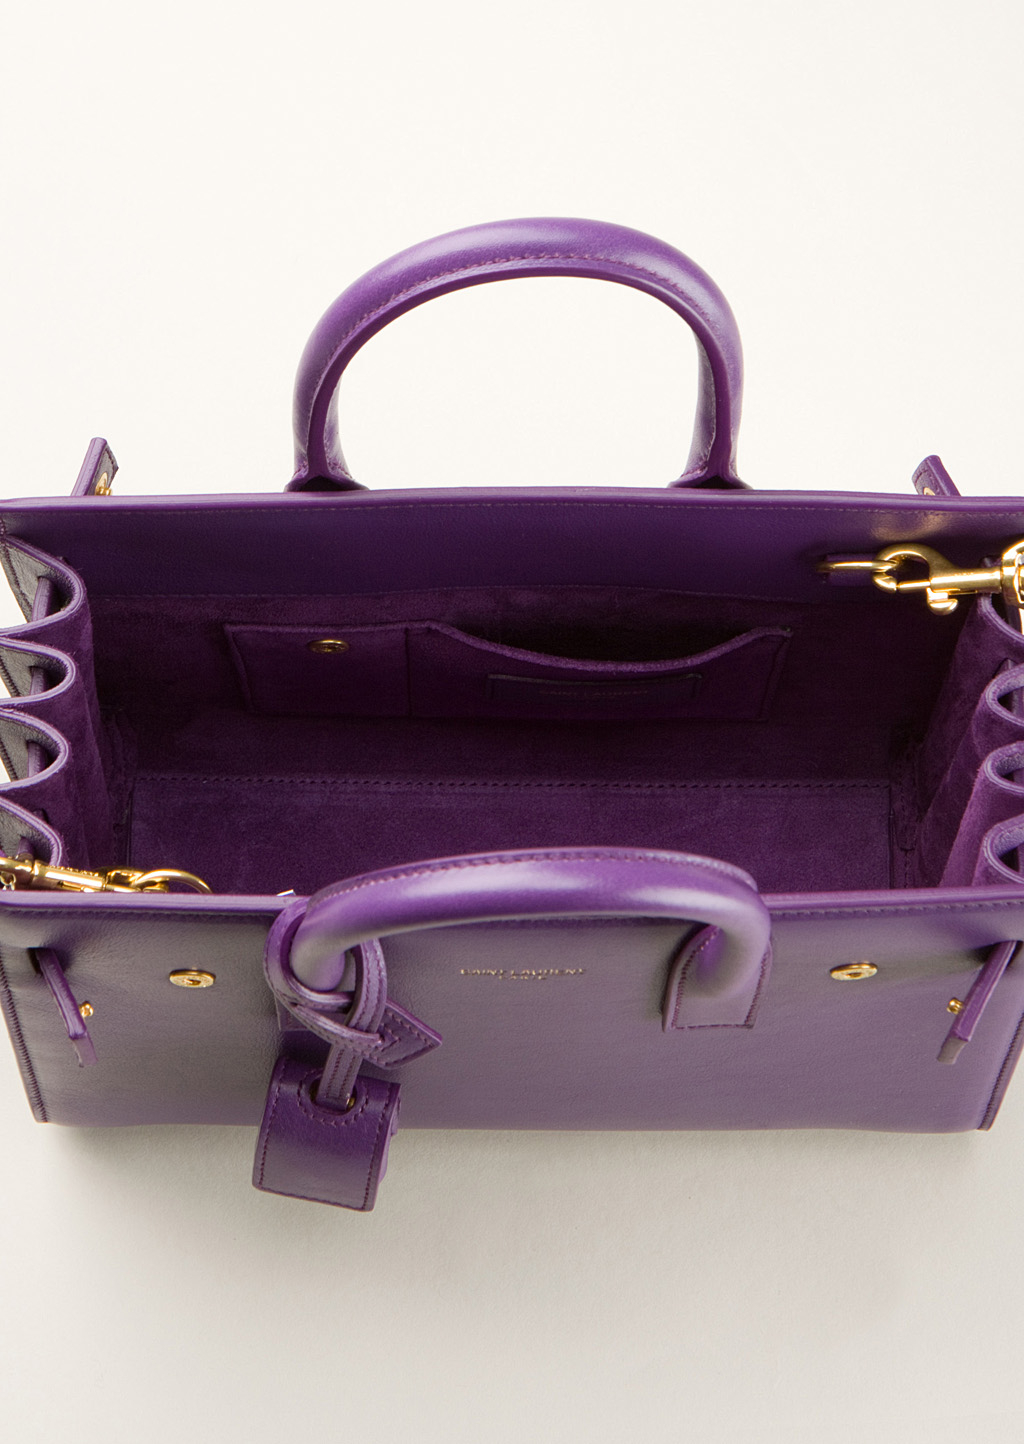 Saint laurent Classic Nano Sac De Jour Bag In Purple Leather in ...